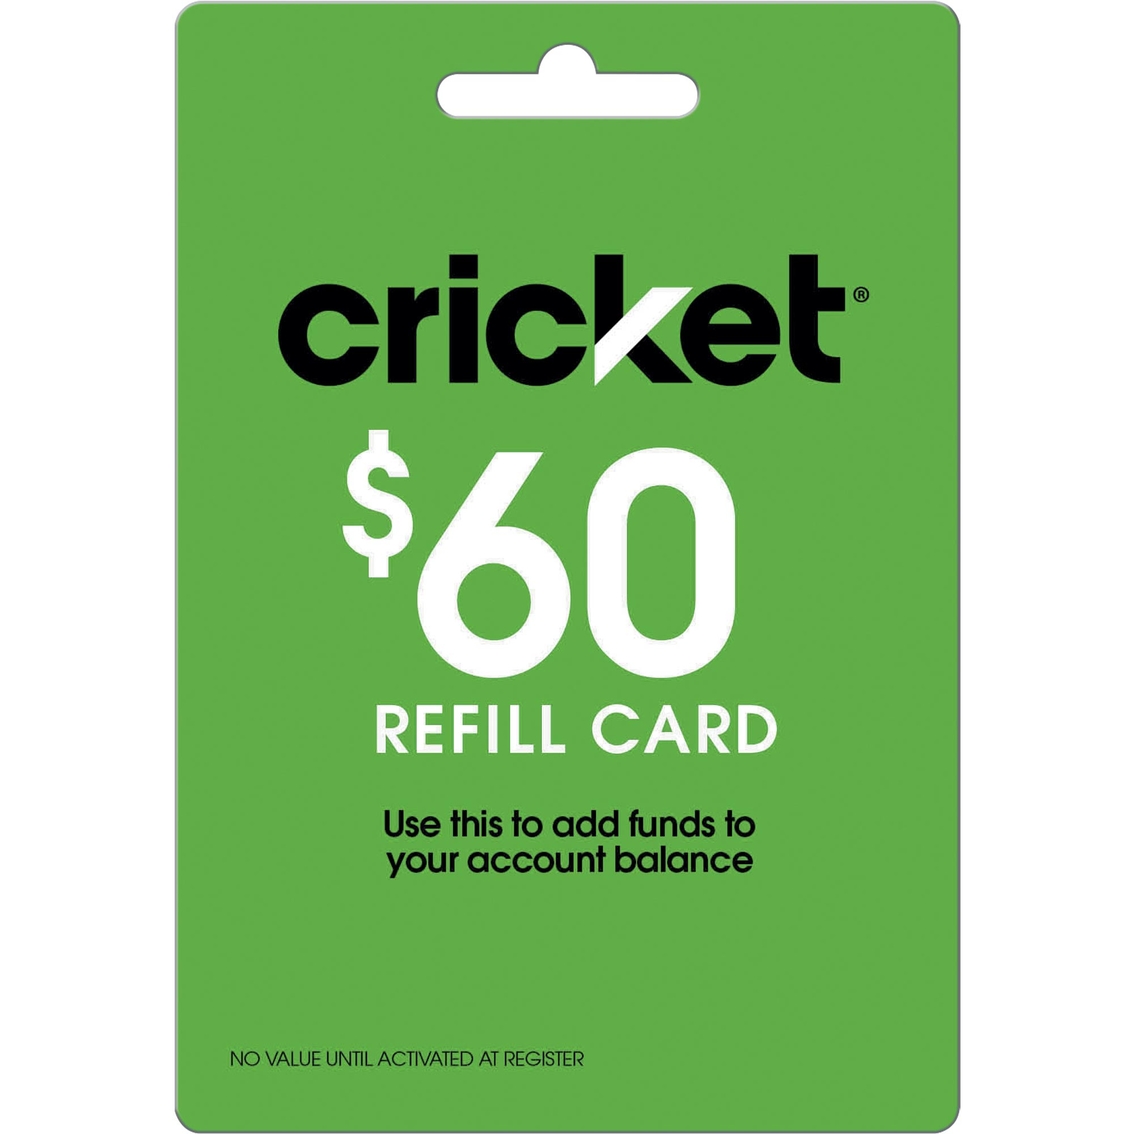 Cricket $60 Refill Gift Card